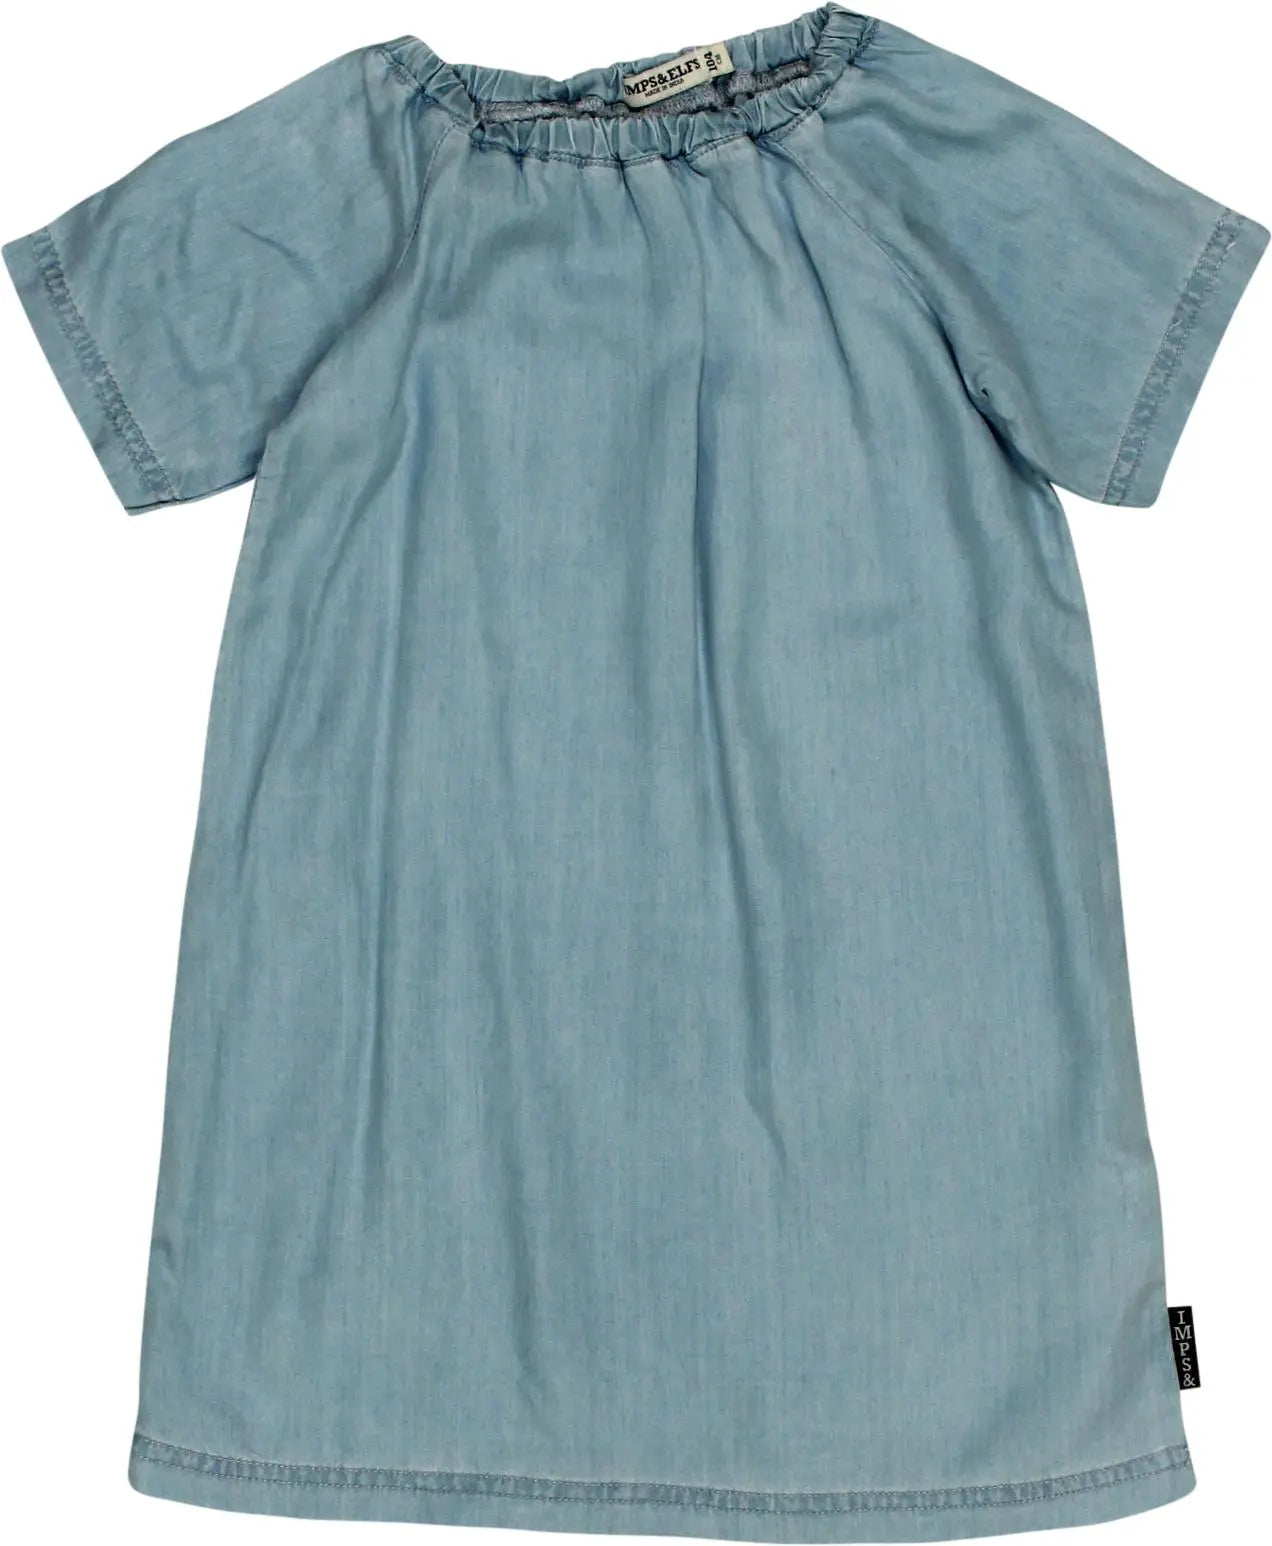 Imps & Elfs - Blue Dress- ThriftTale.com - Vintage and second handclothing